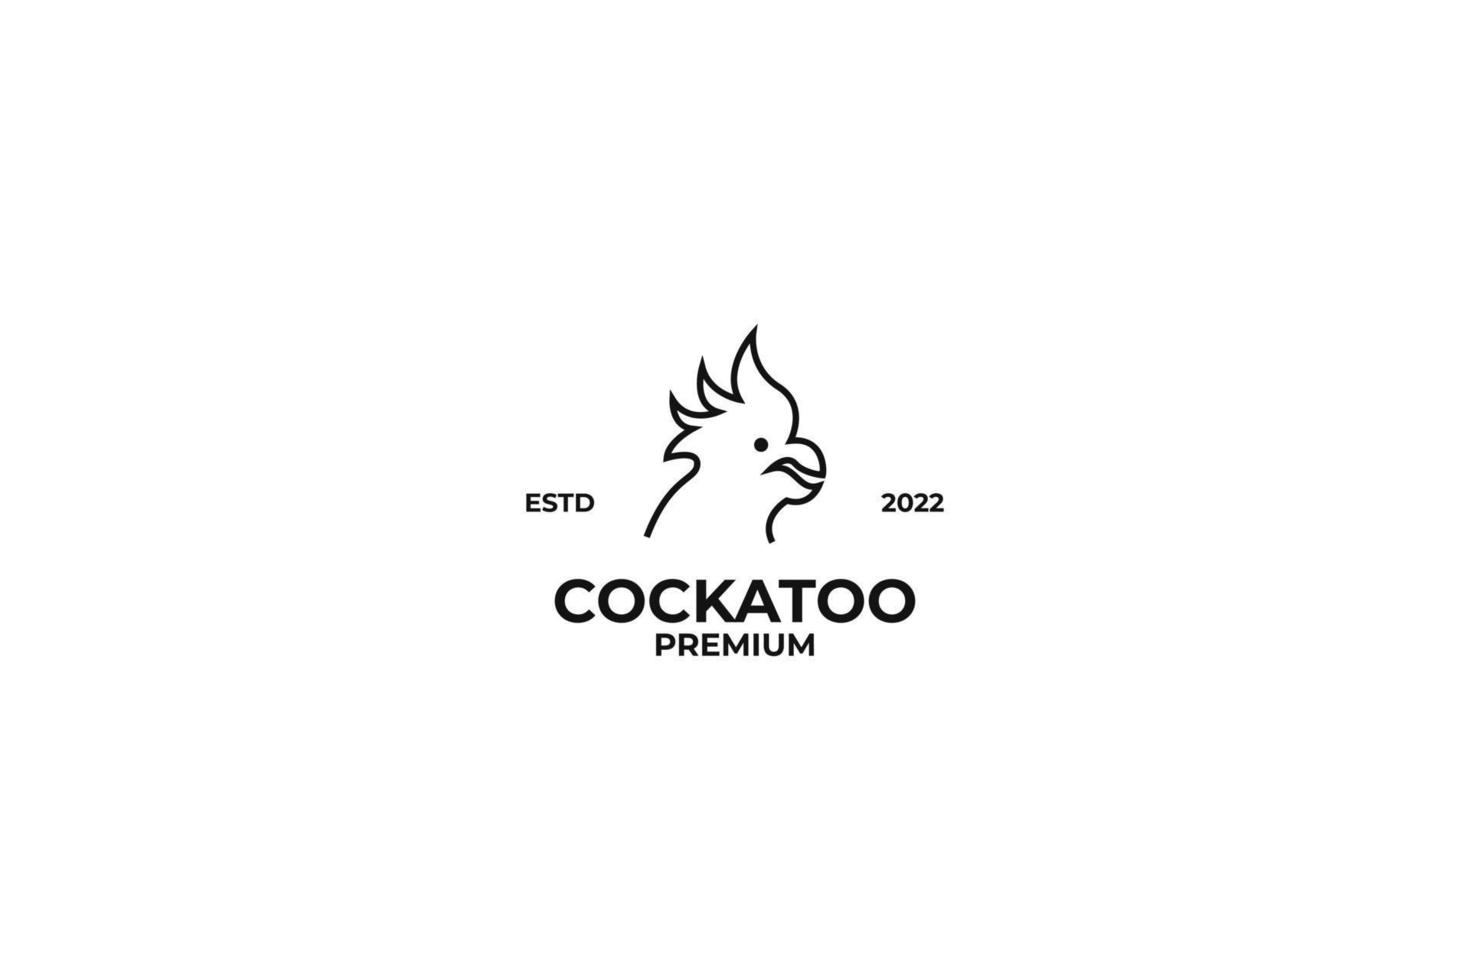 Flat cockatoo head logo design vector  template illustration